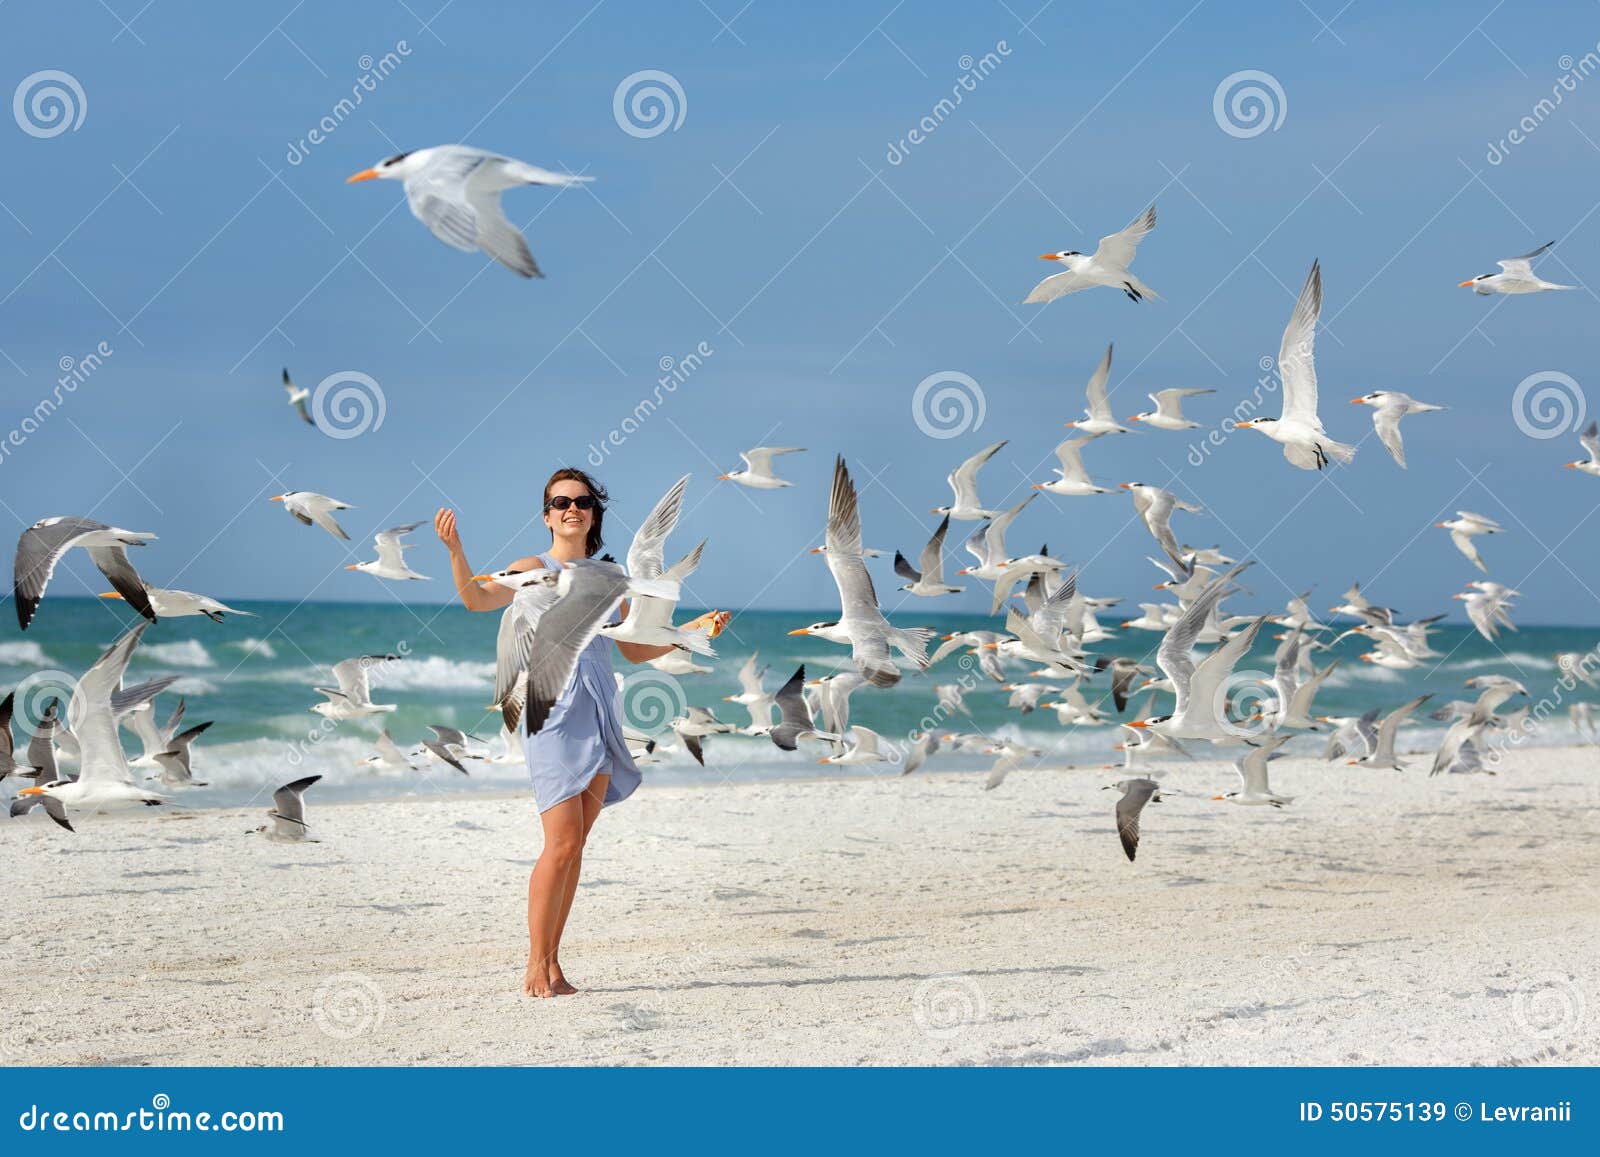 young beautiful woman watching the seagulls flying